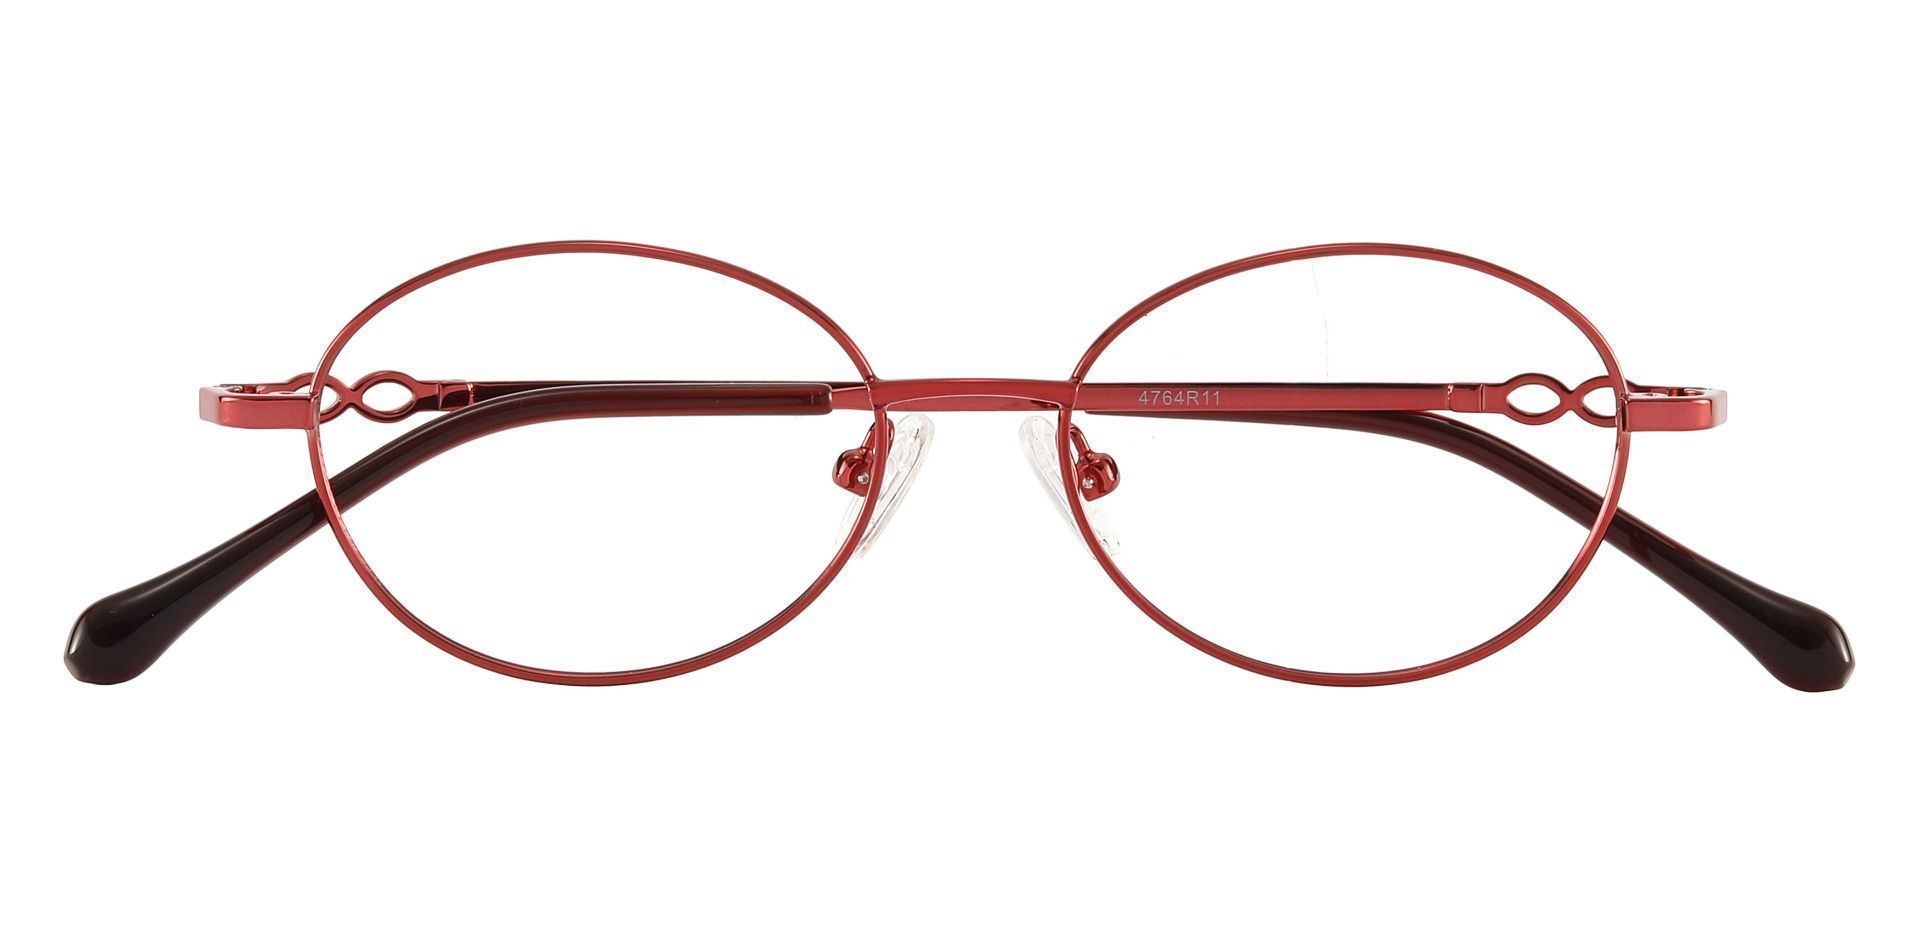 Odyssey Oval Prescription Glasses - Red